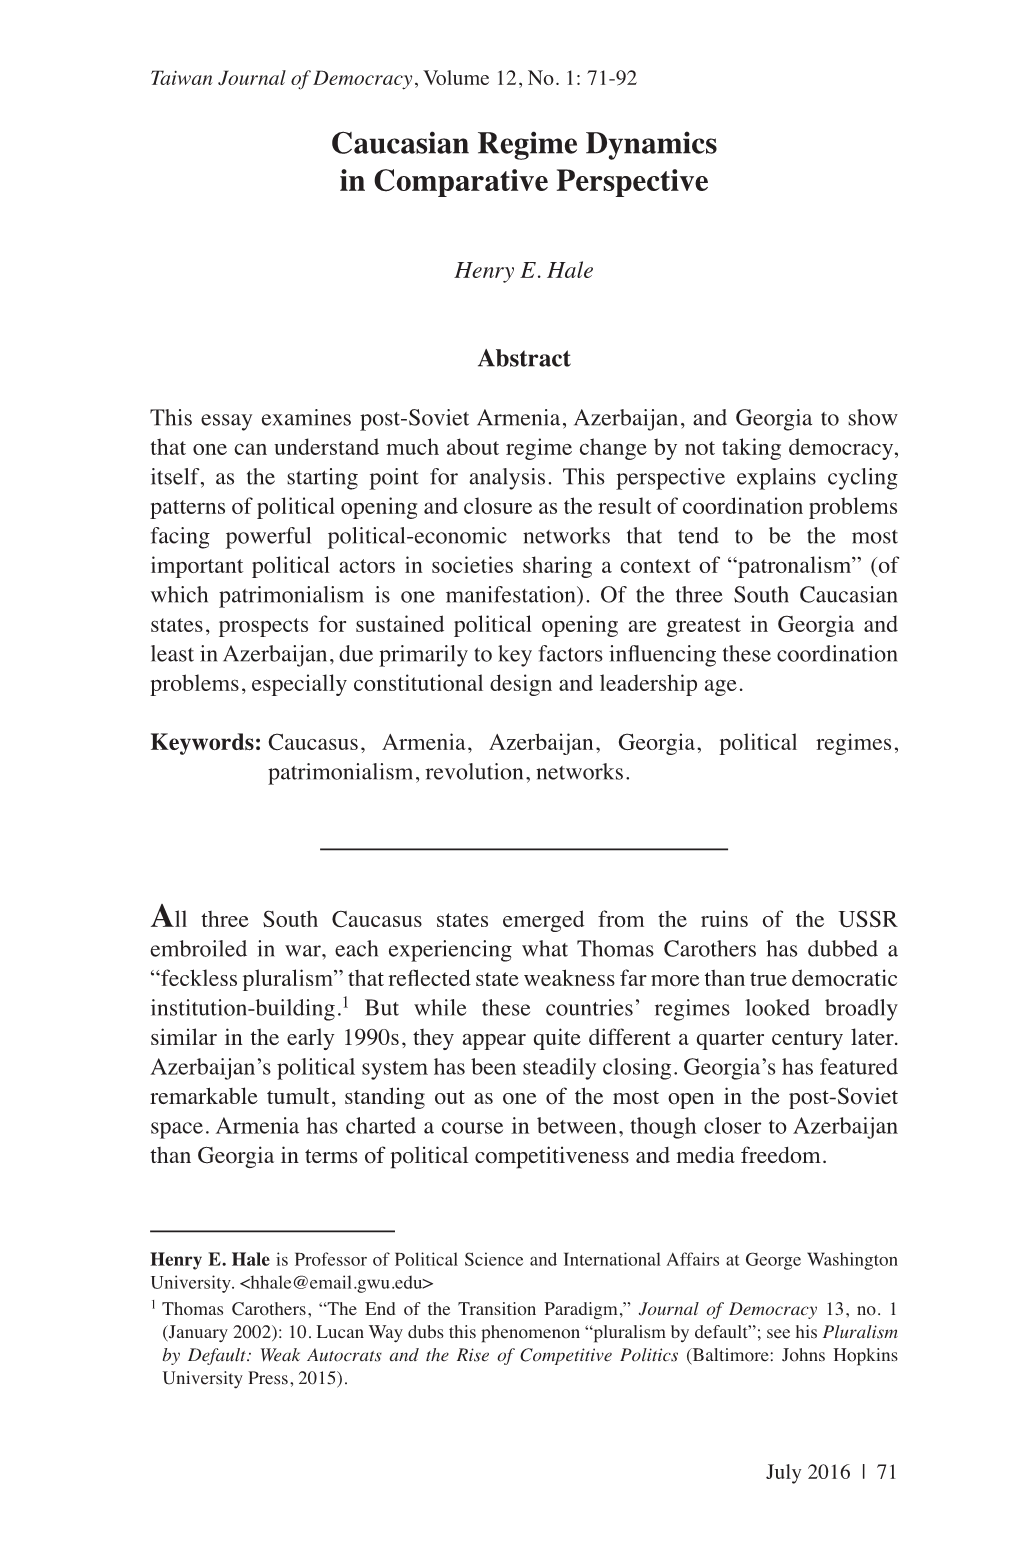 Caucasian Regime Dynamics in Comparative Perspective